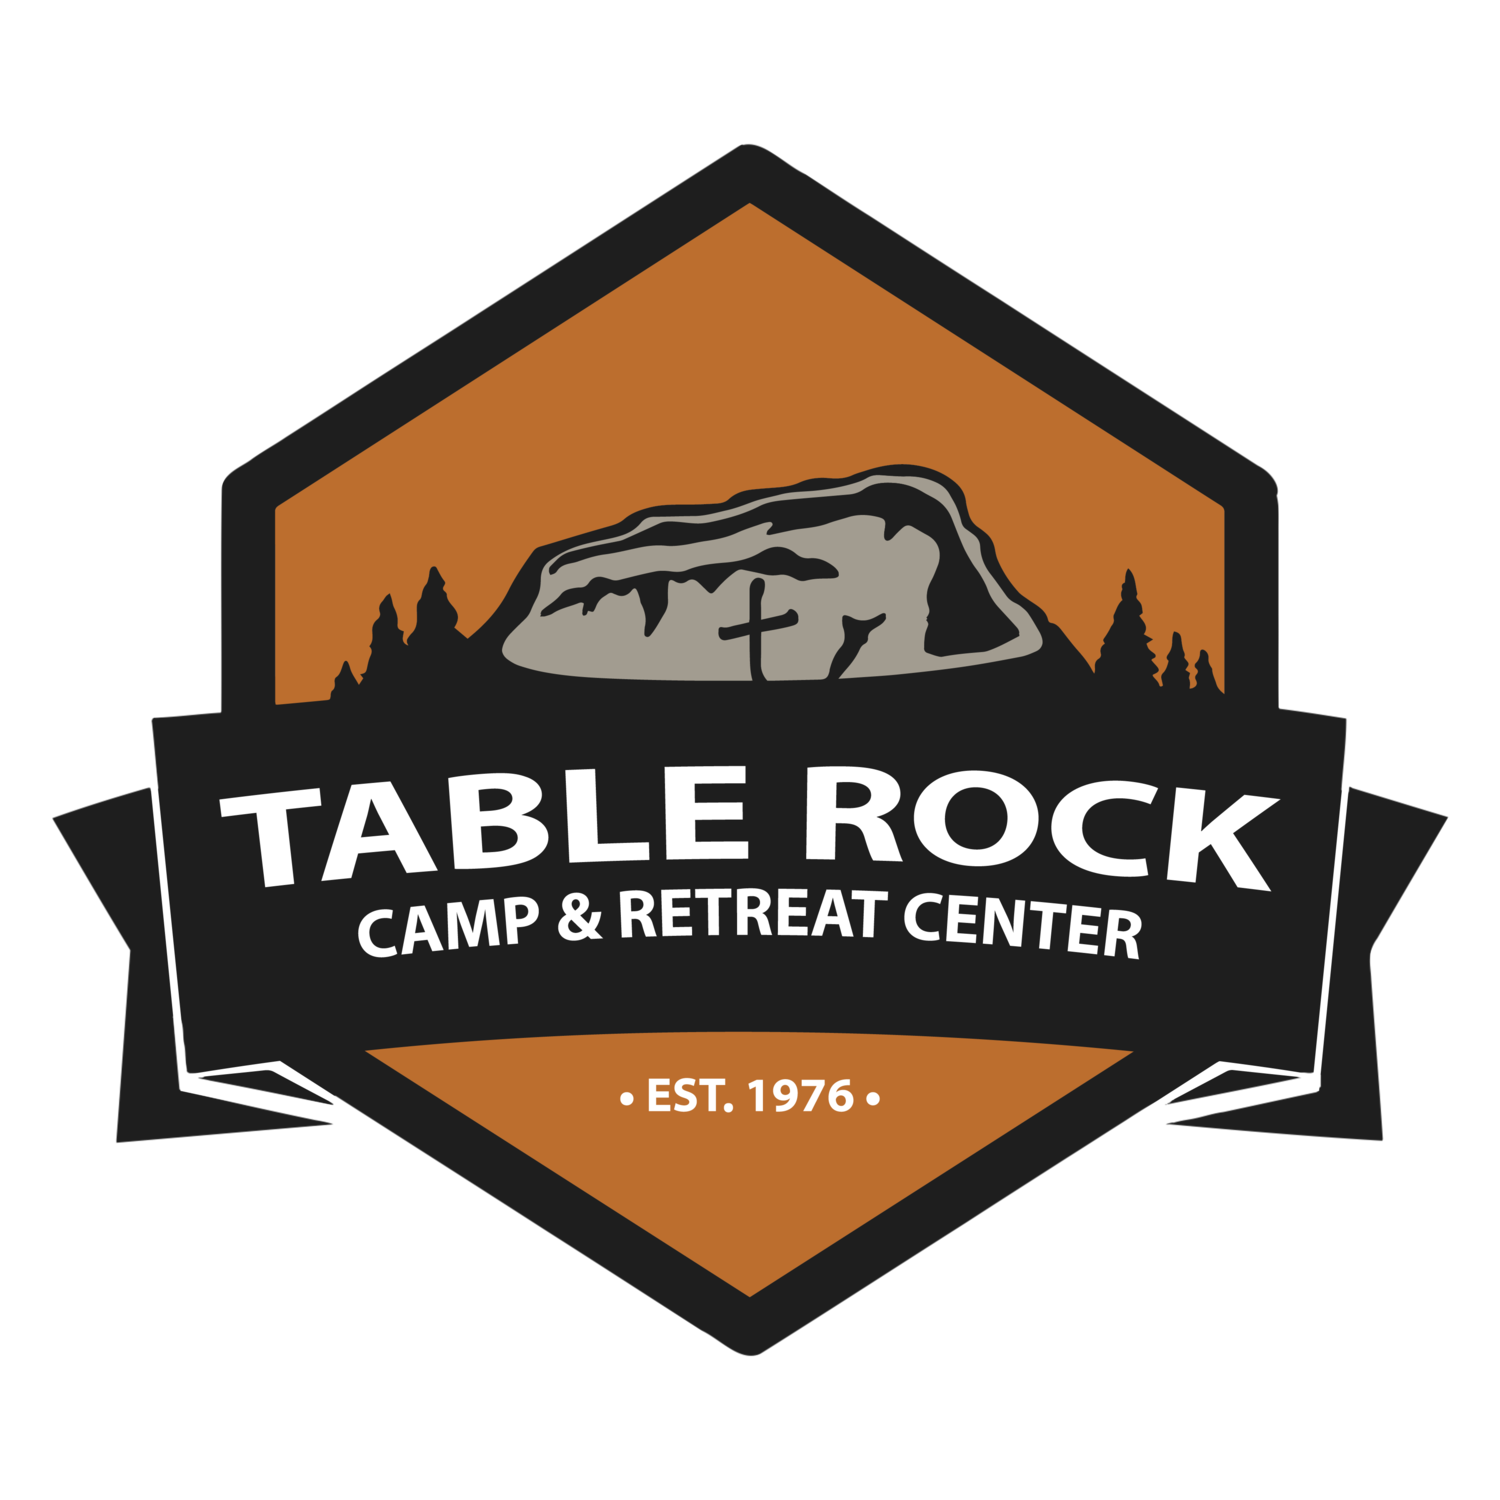 Table Rock Camp & Retreat Center